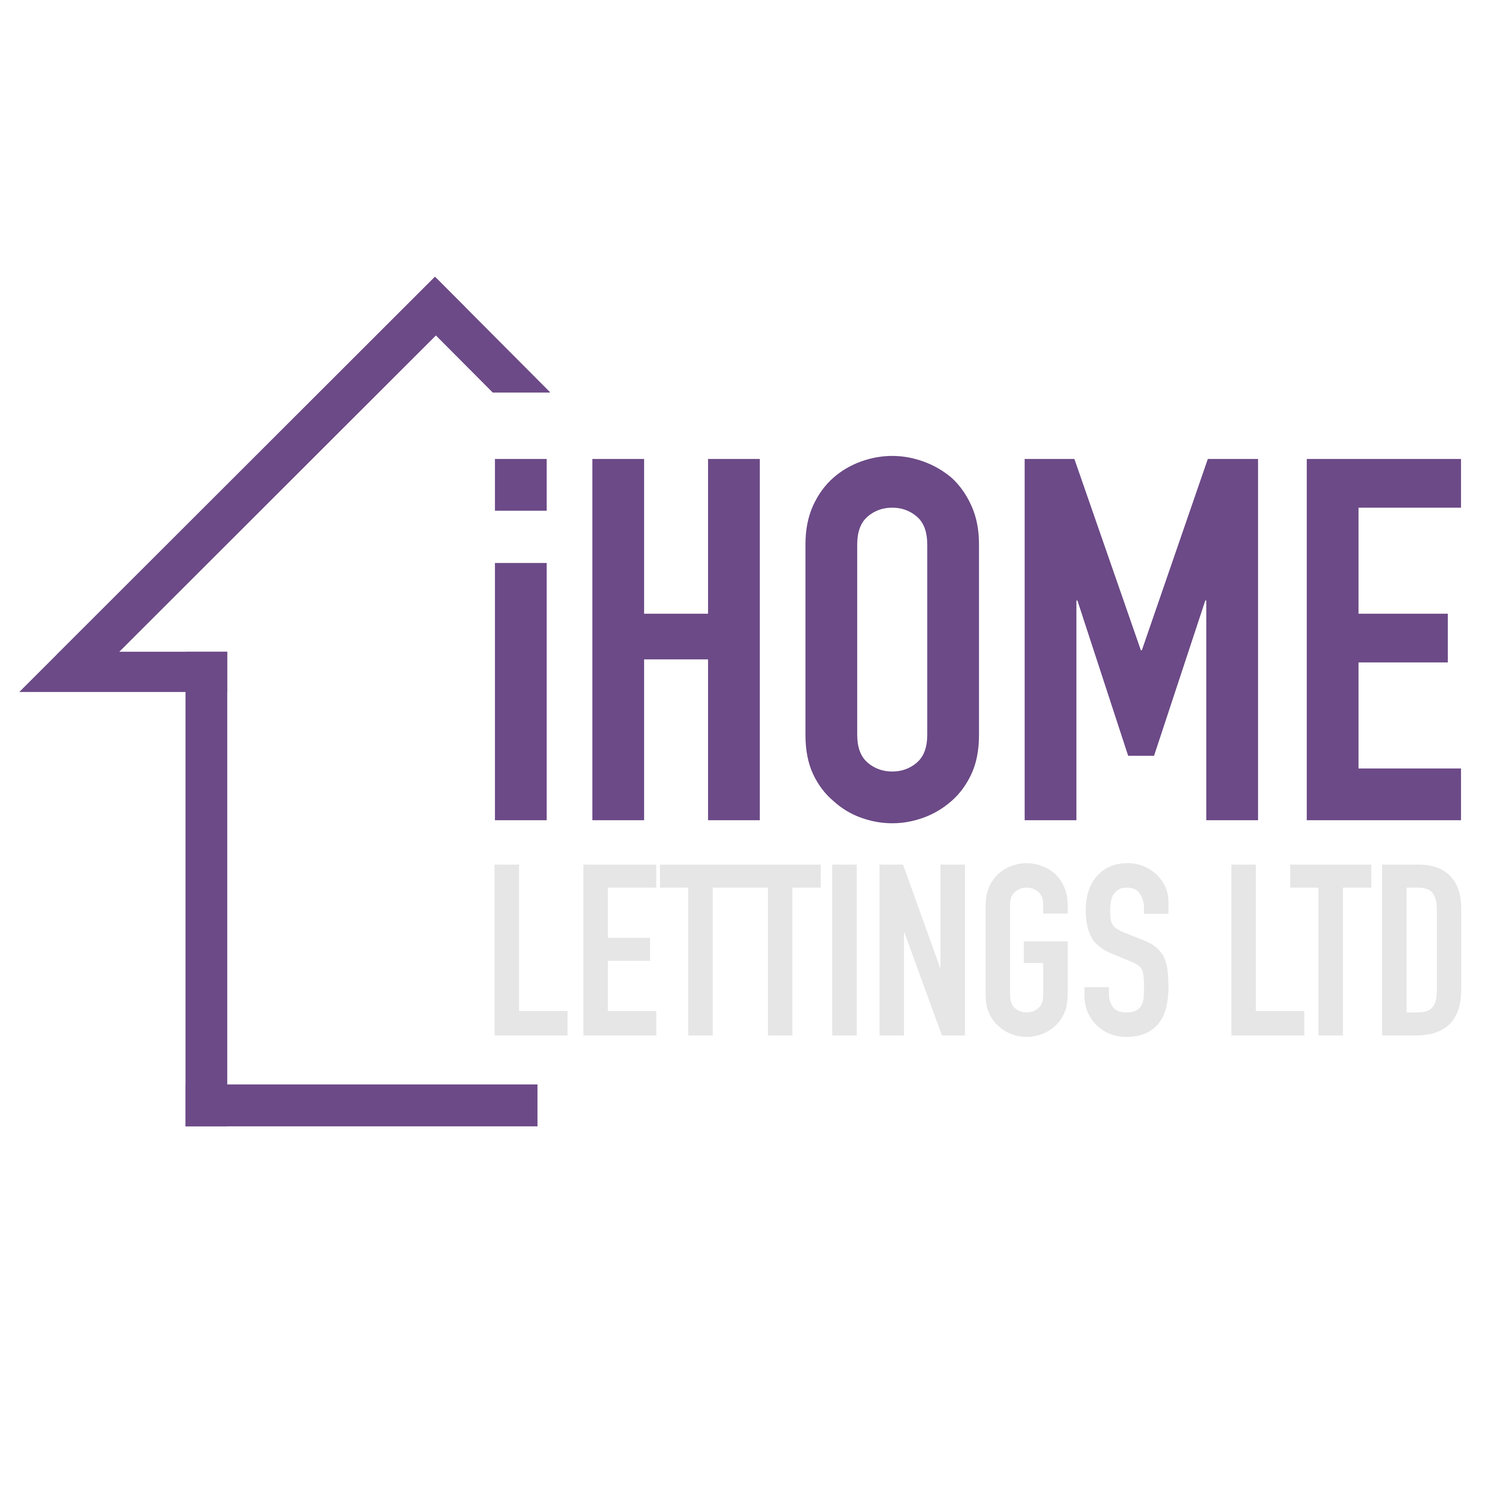 iHome Lettings Ltd